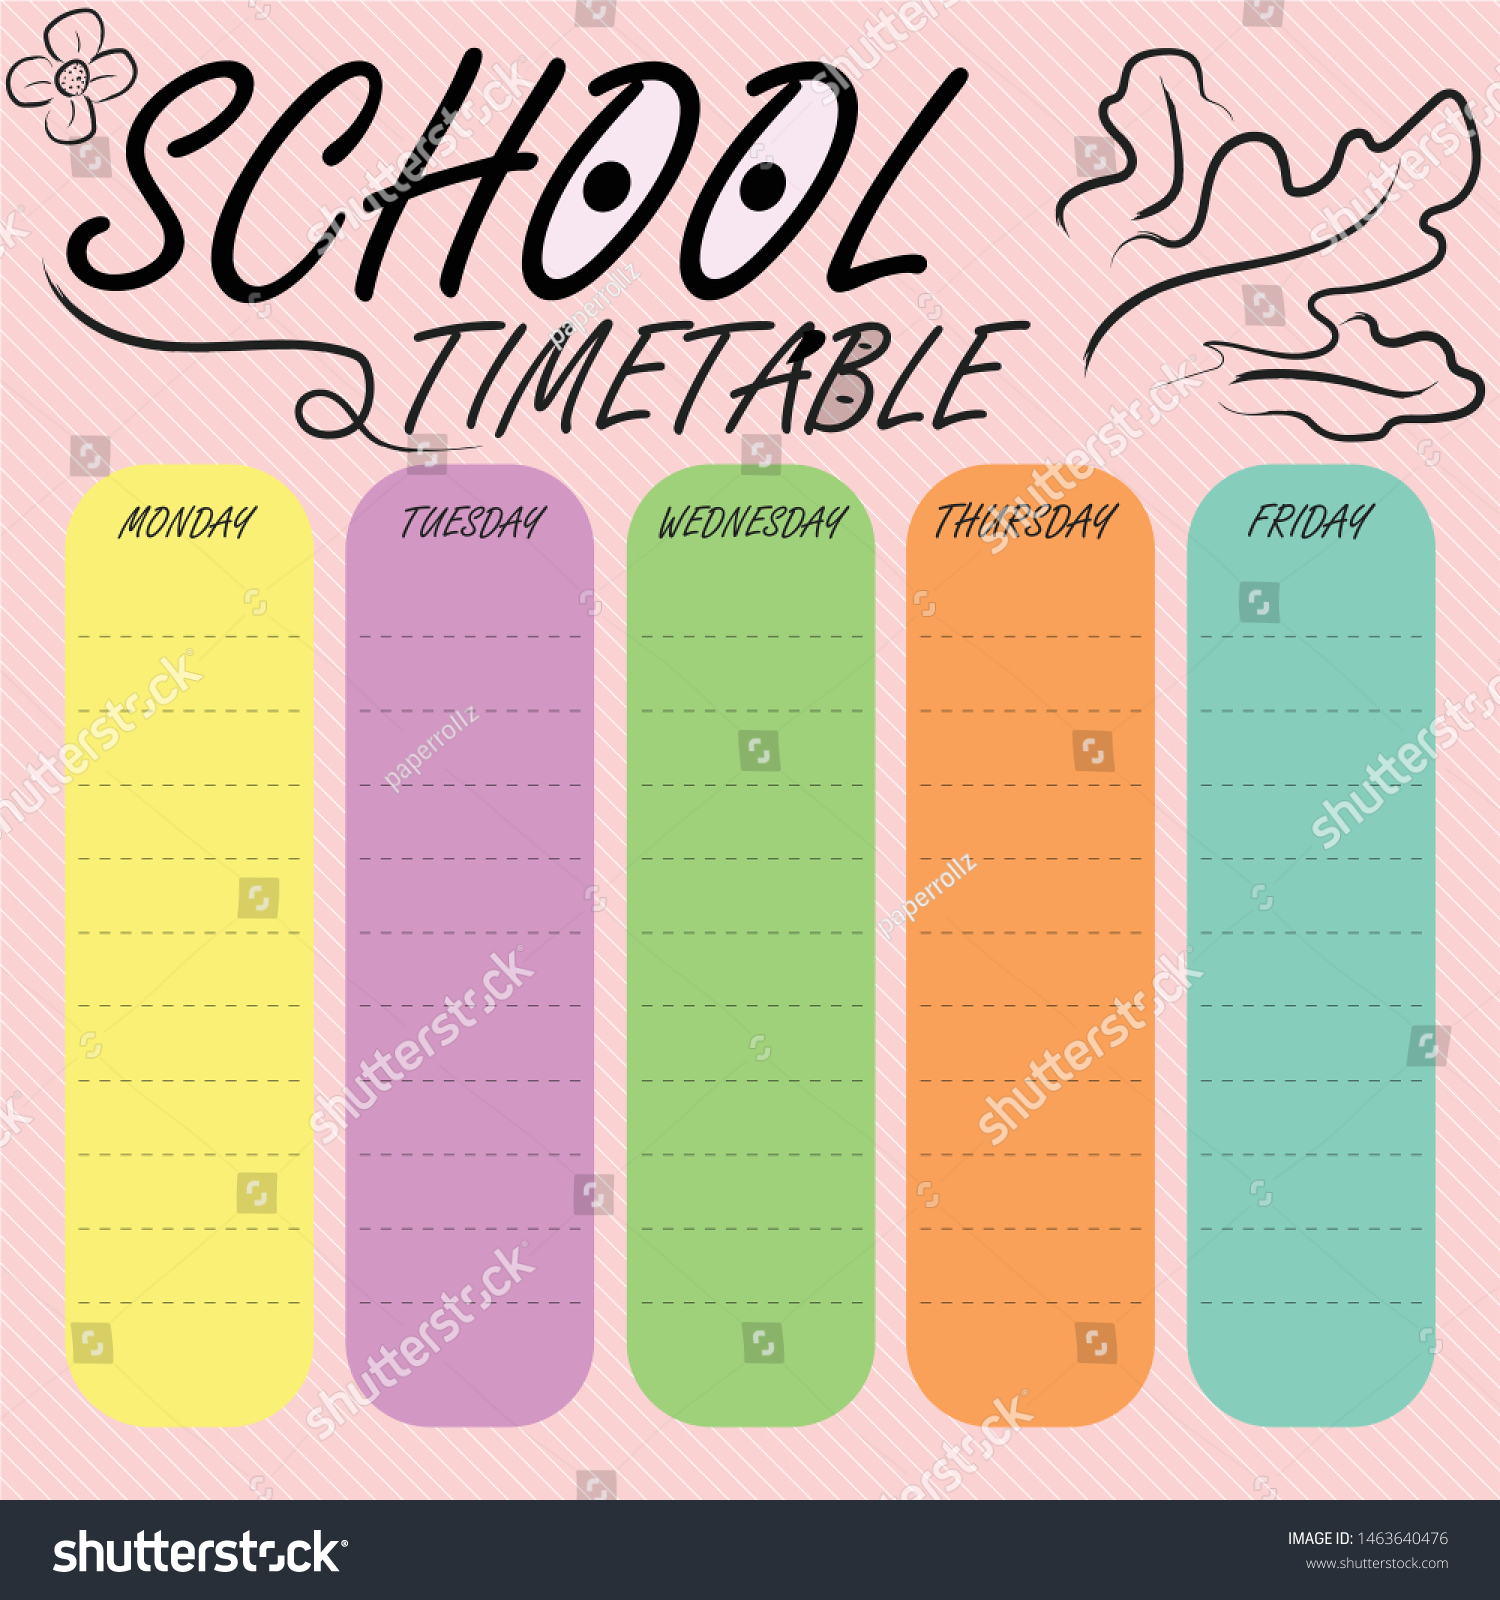 premium-vector-school-timetable-template-weekly-classes-schedule